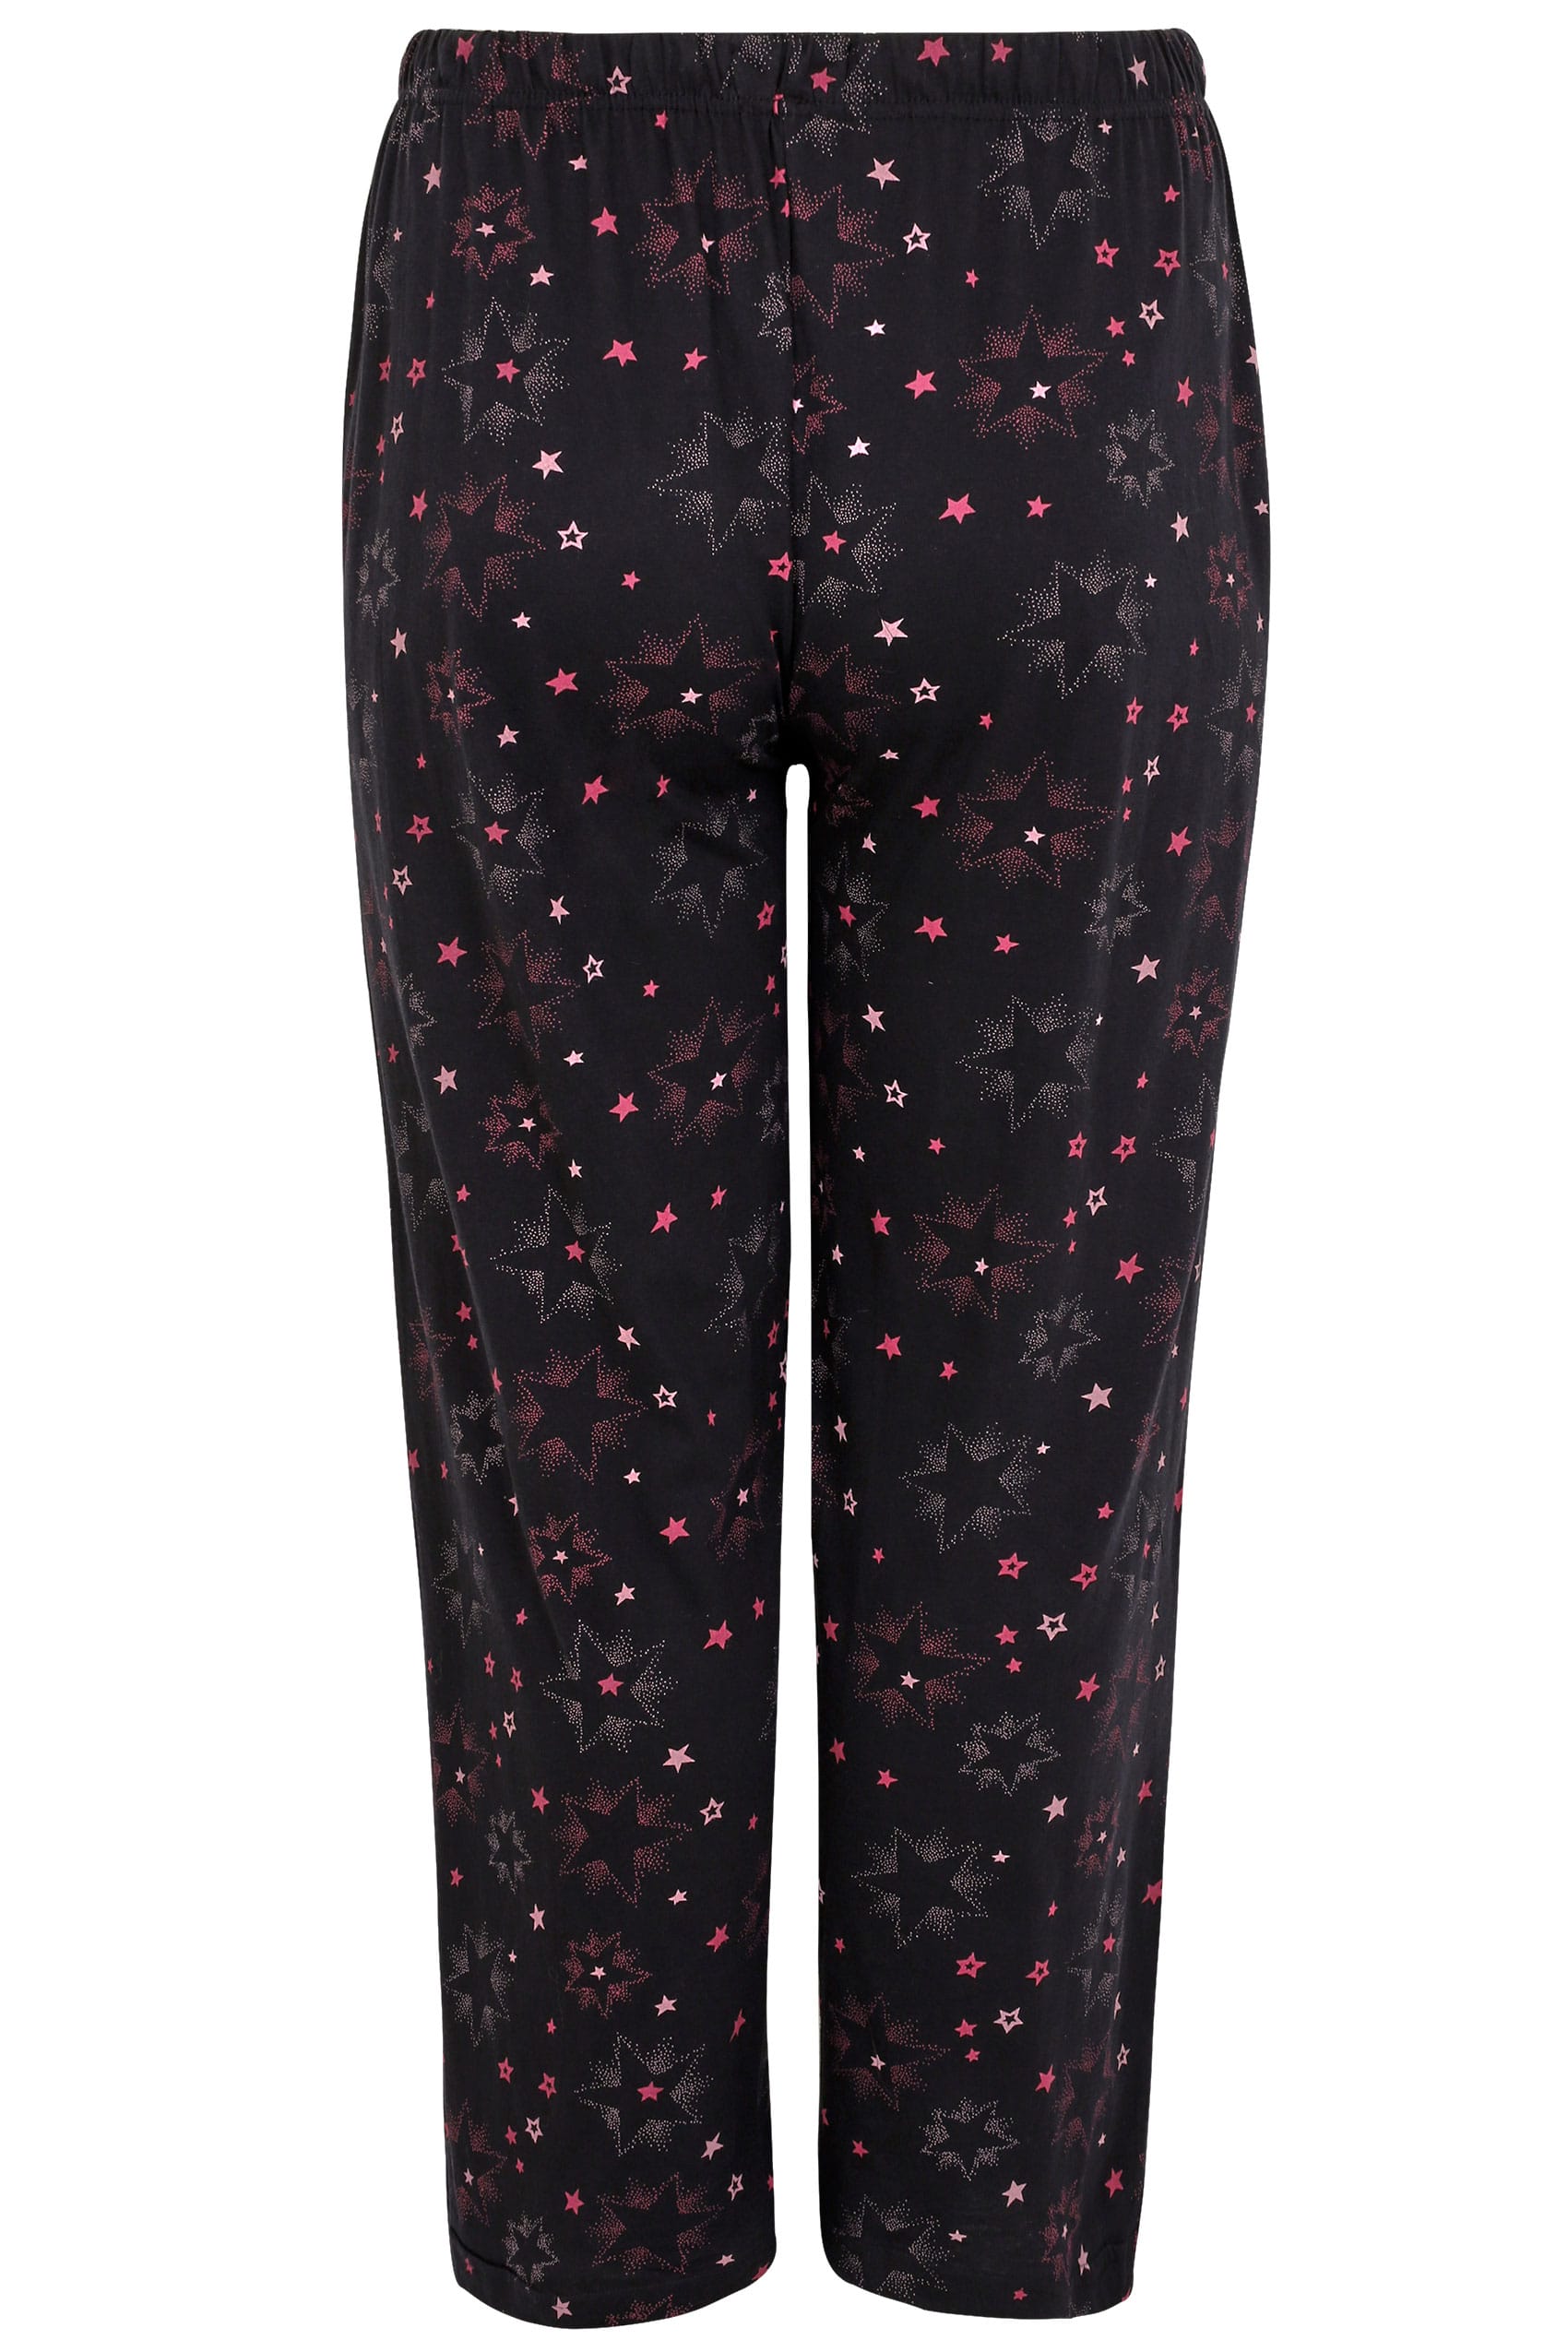 Black And Pink Star Print Pyjama Bottoms Plus Size 16 To 36